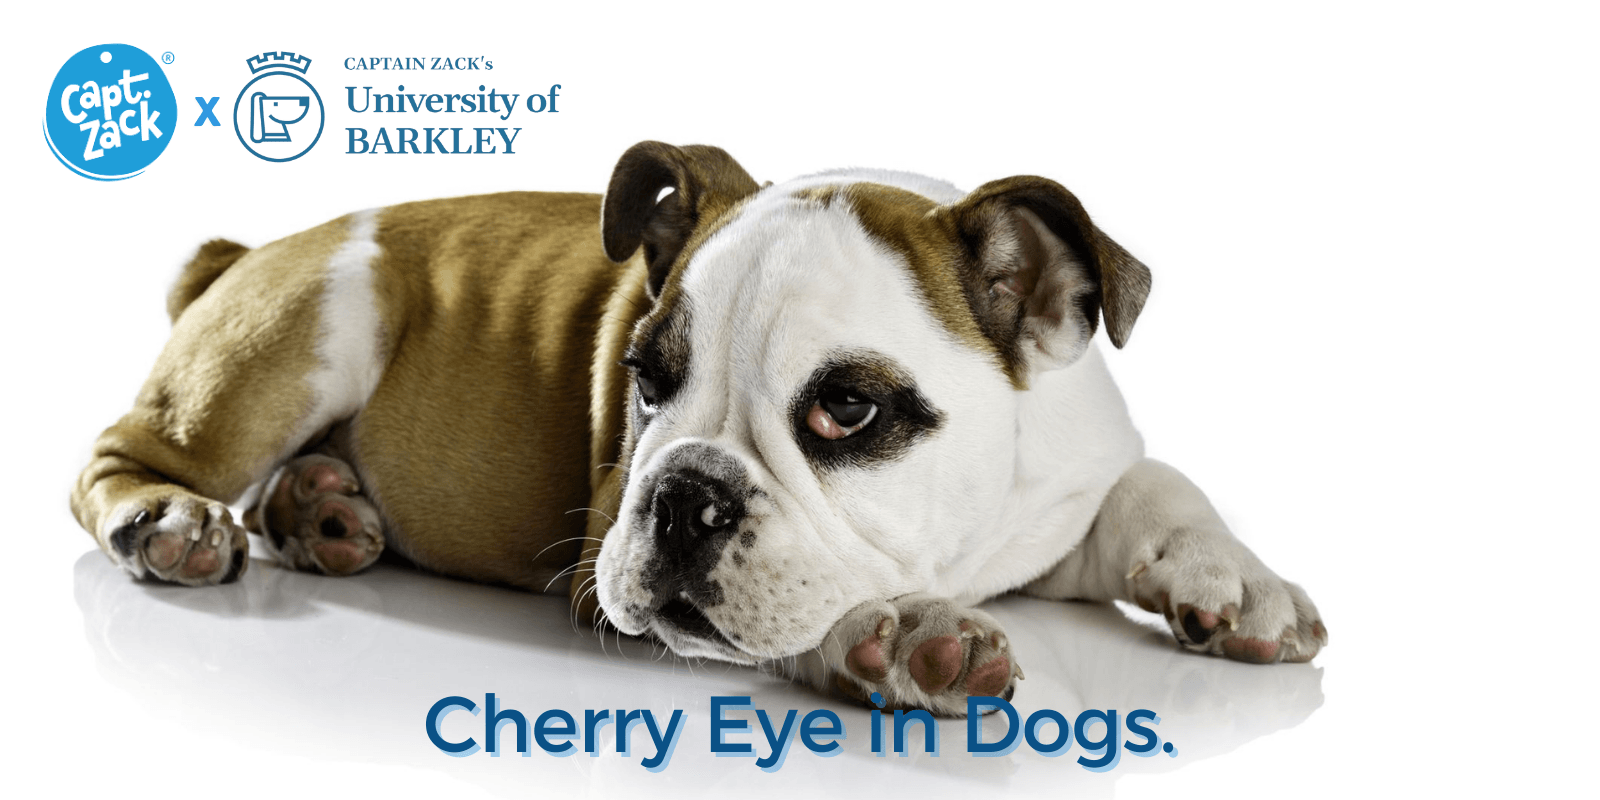 Cherry Eye in Dogs - Captain Zack